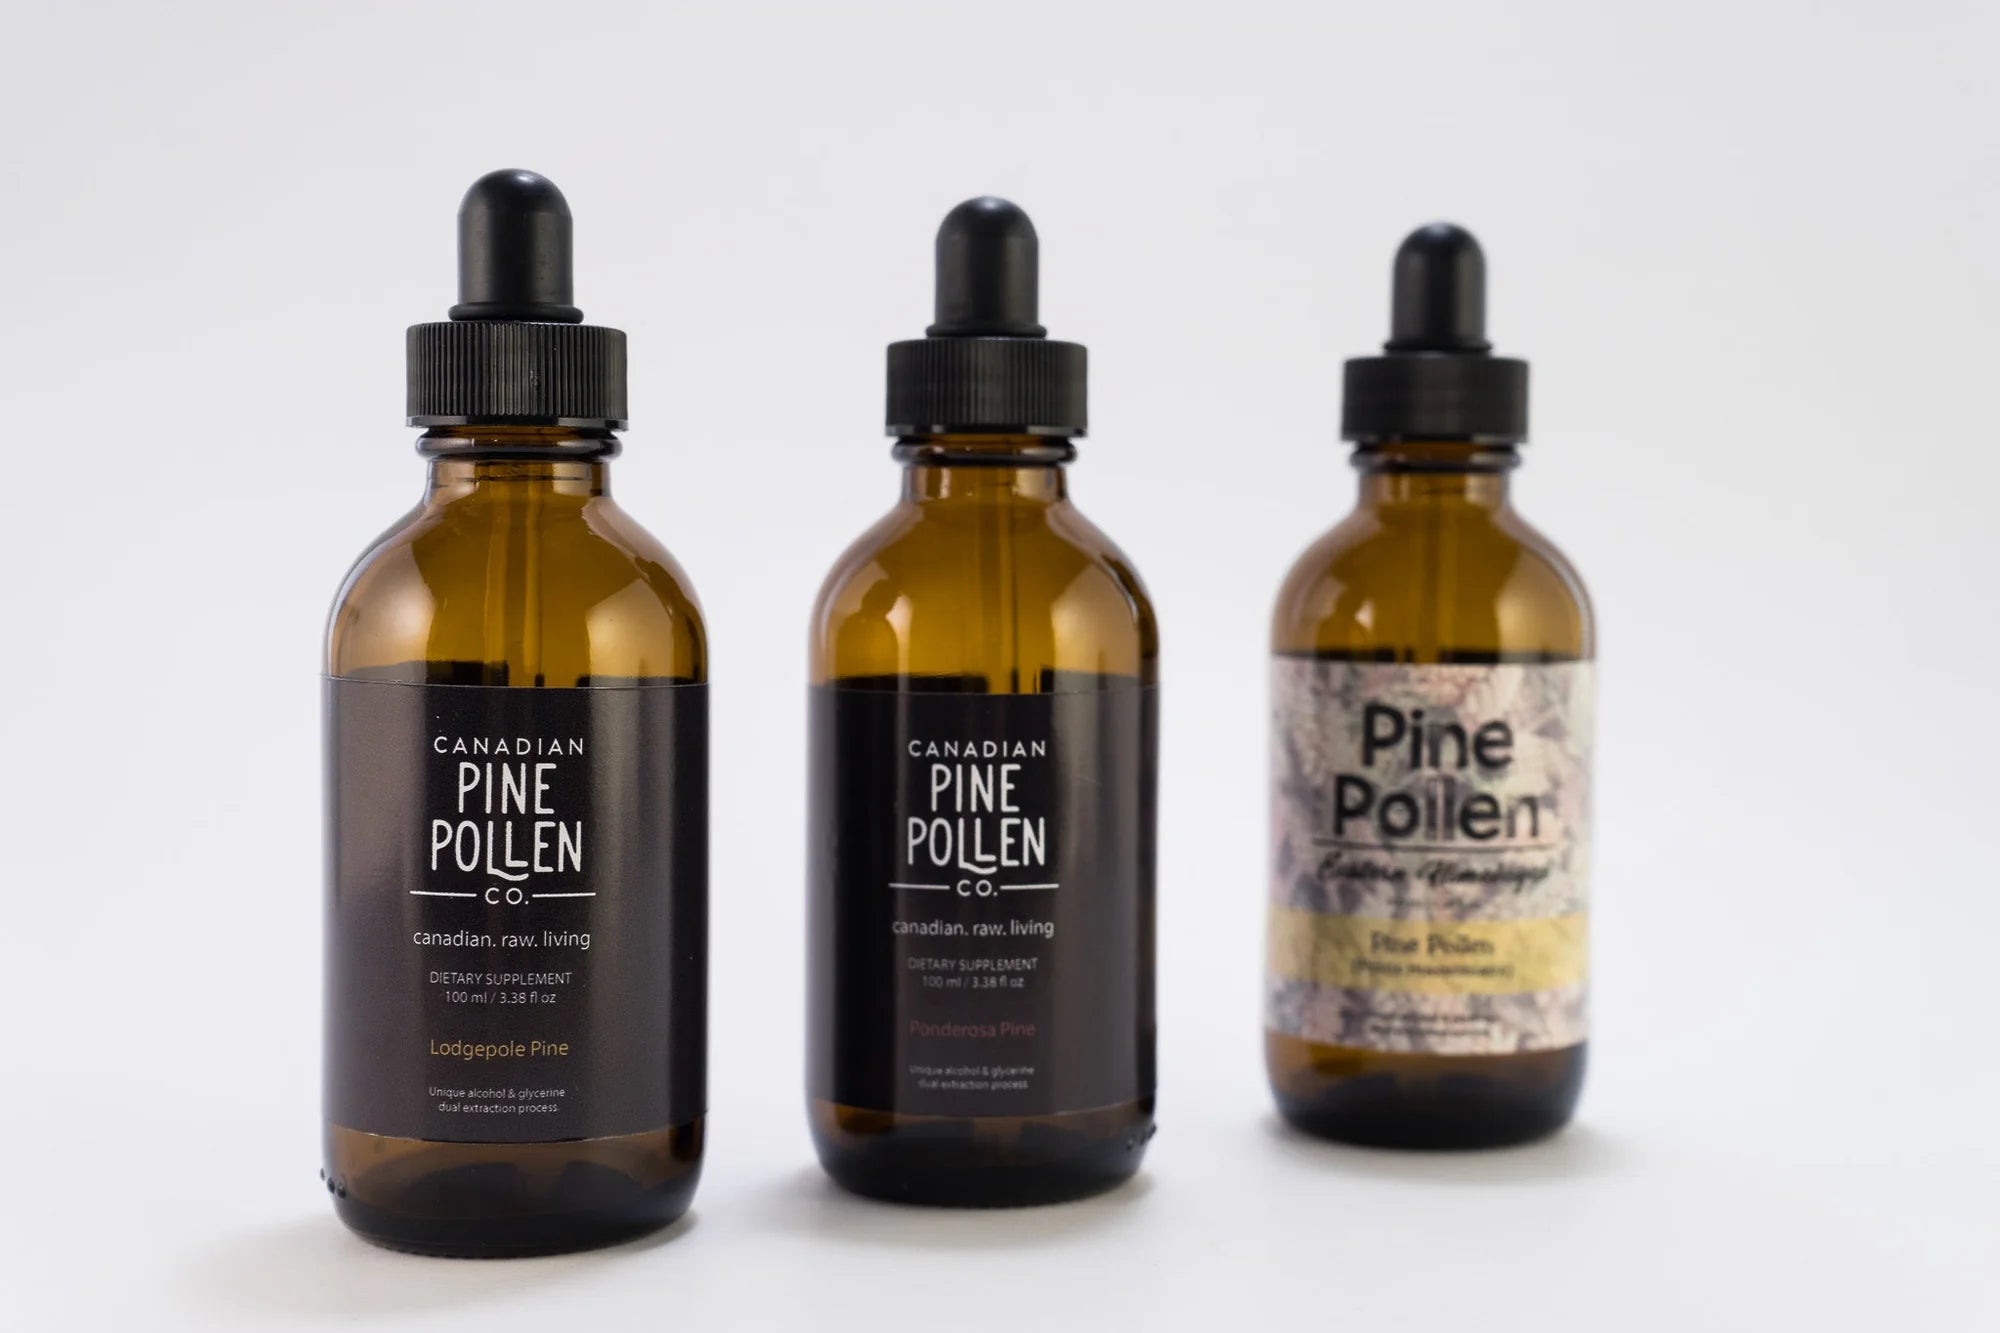 Pine Pollen Tinctures - Important Facts